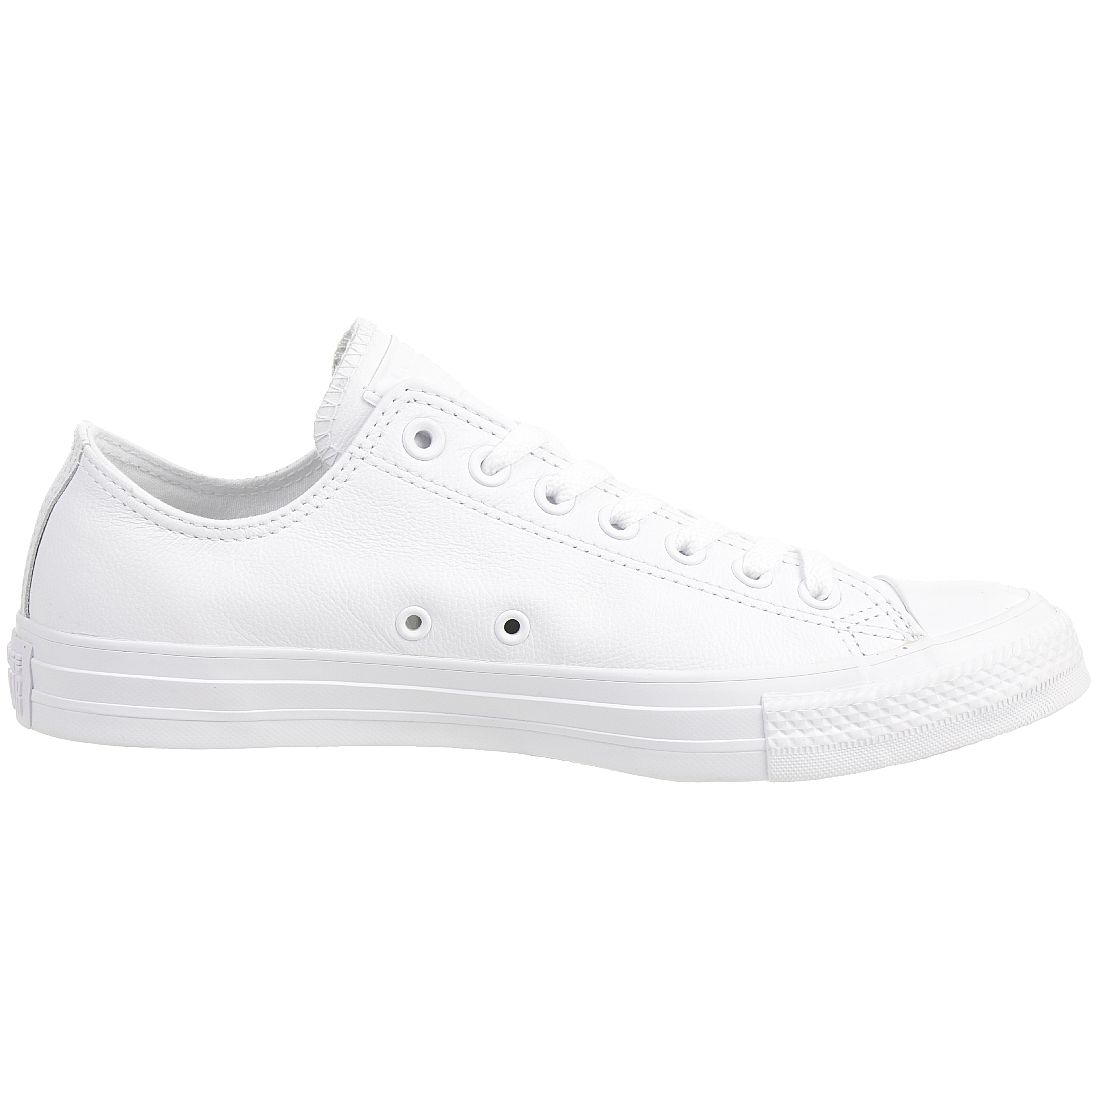 Converse C Taylor All Star OX Chuck Sneaker Leder mono weiß 136823C